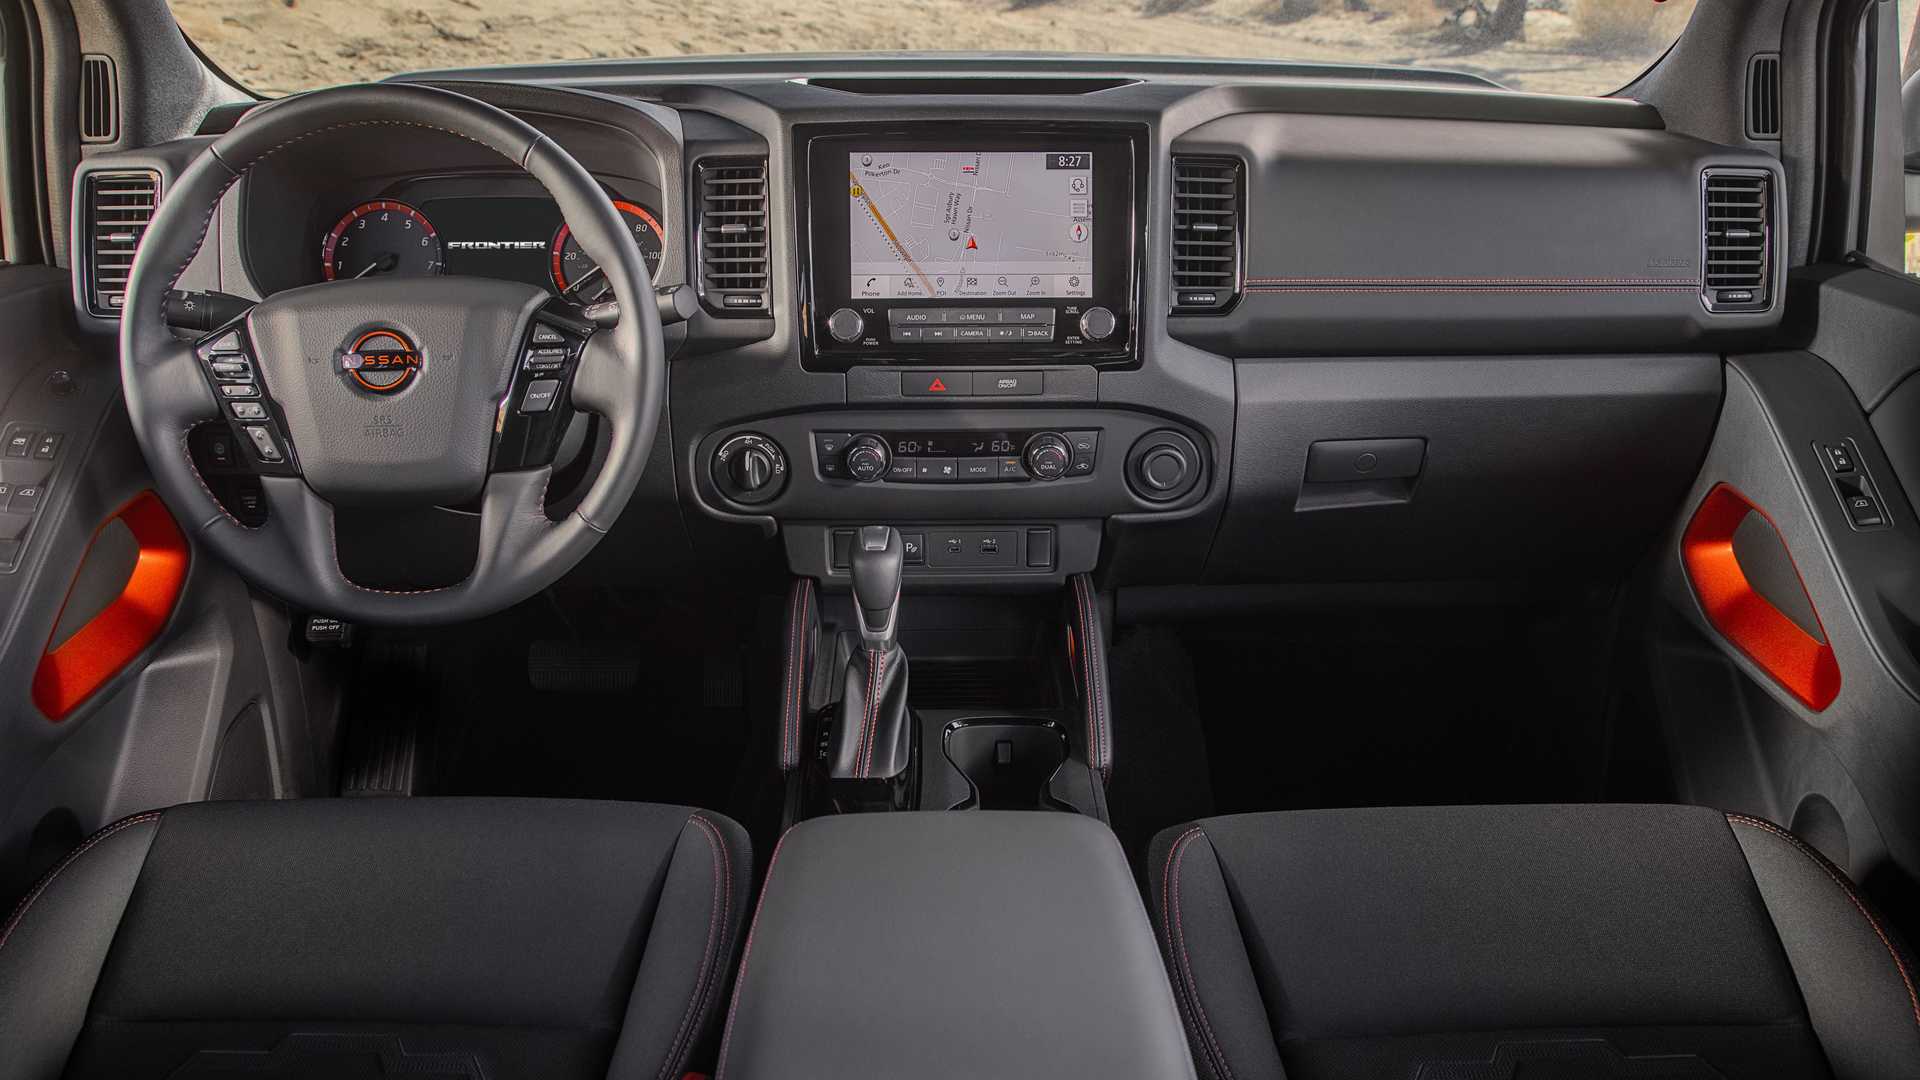 Ra mắt Nissan Frontier 2022, đối thủ Toyota Tacoma, Ford Ranger tại Mỹ 2022-nissan-frontier-interior-dashboard.jpg